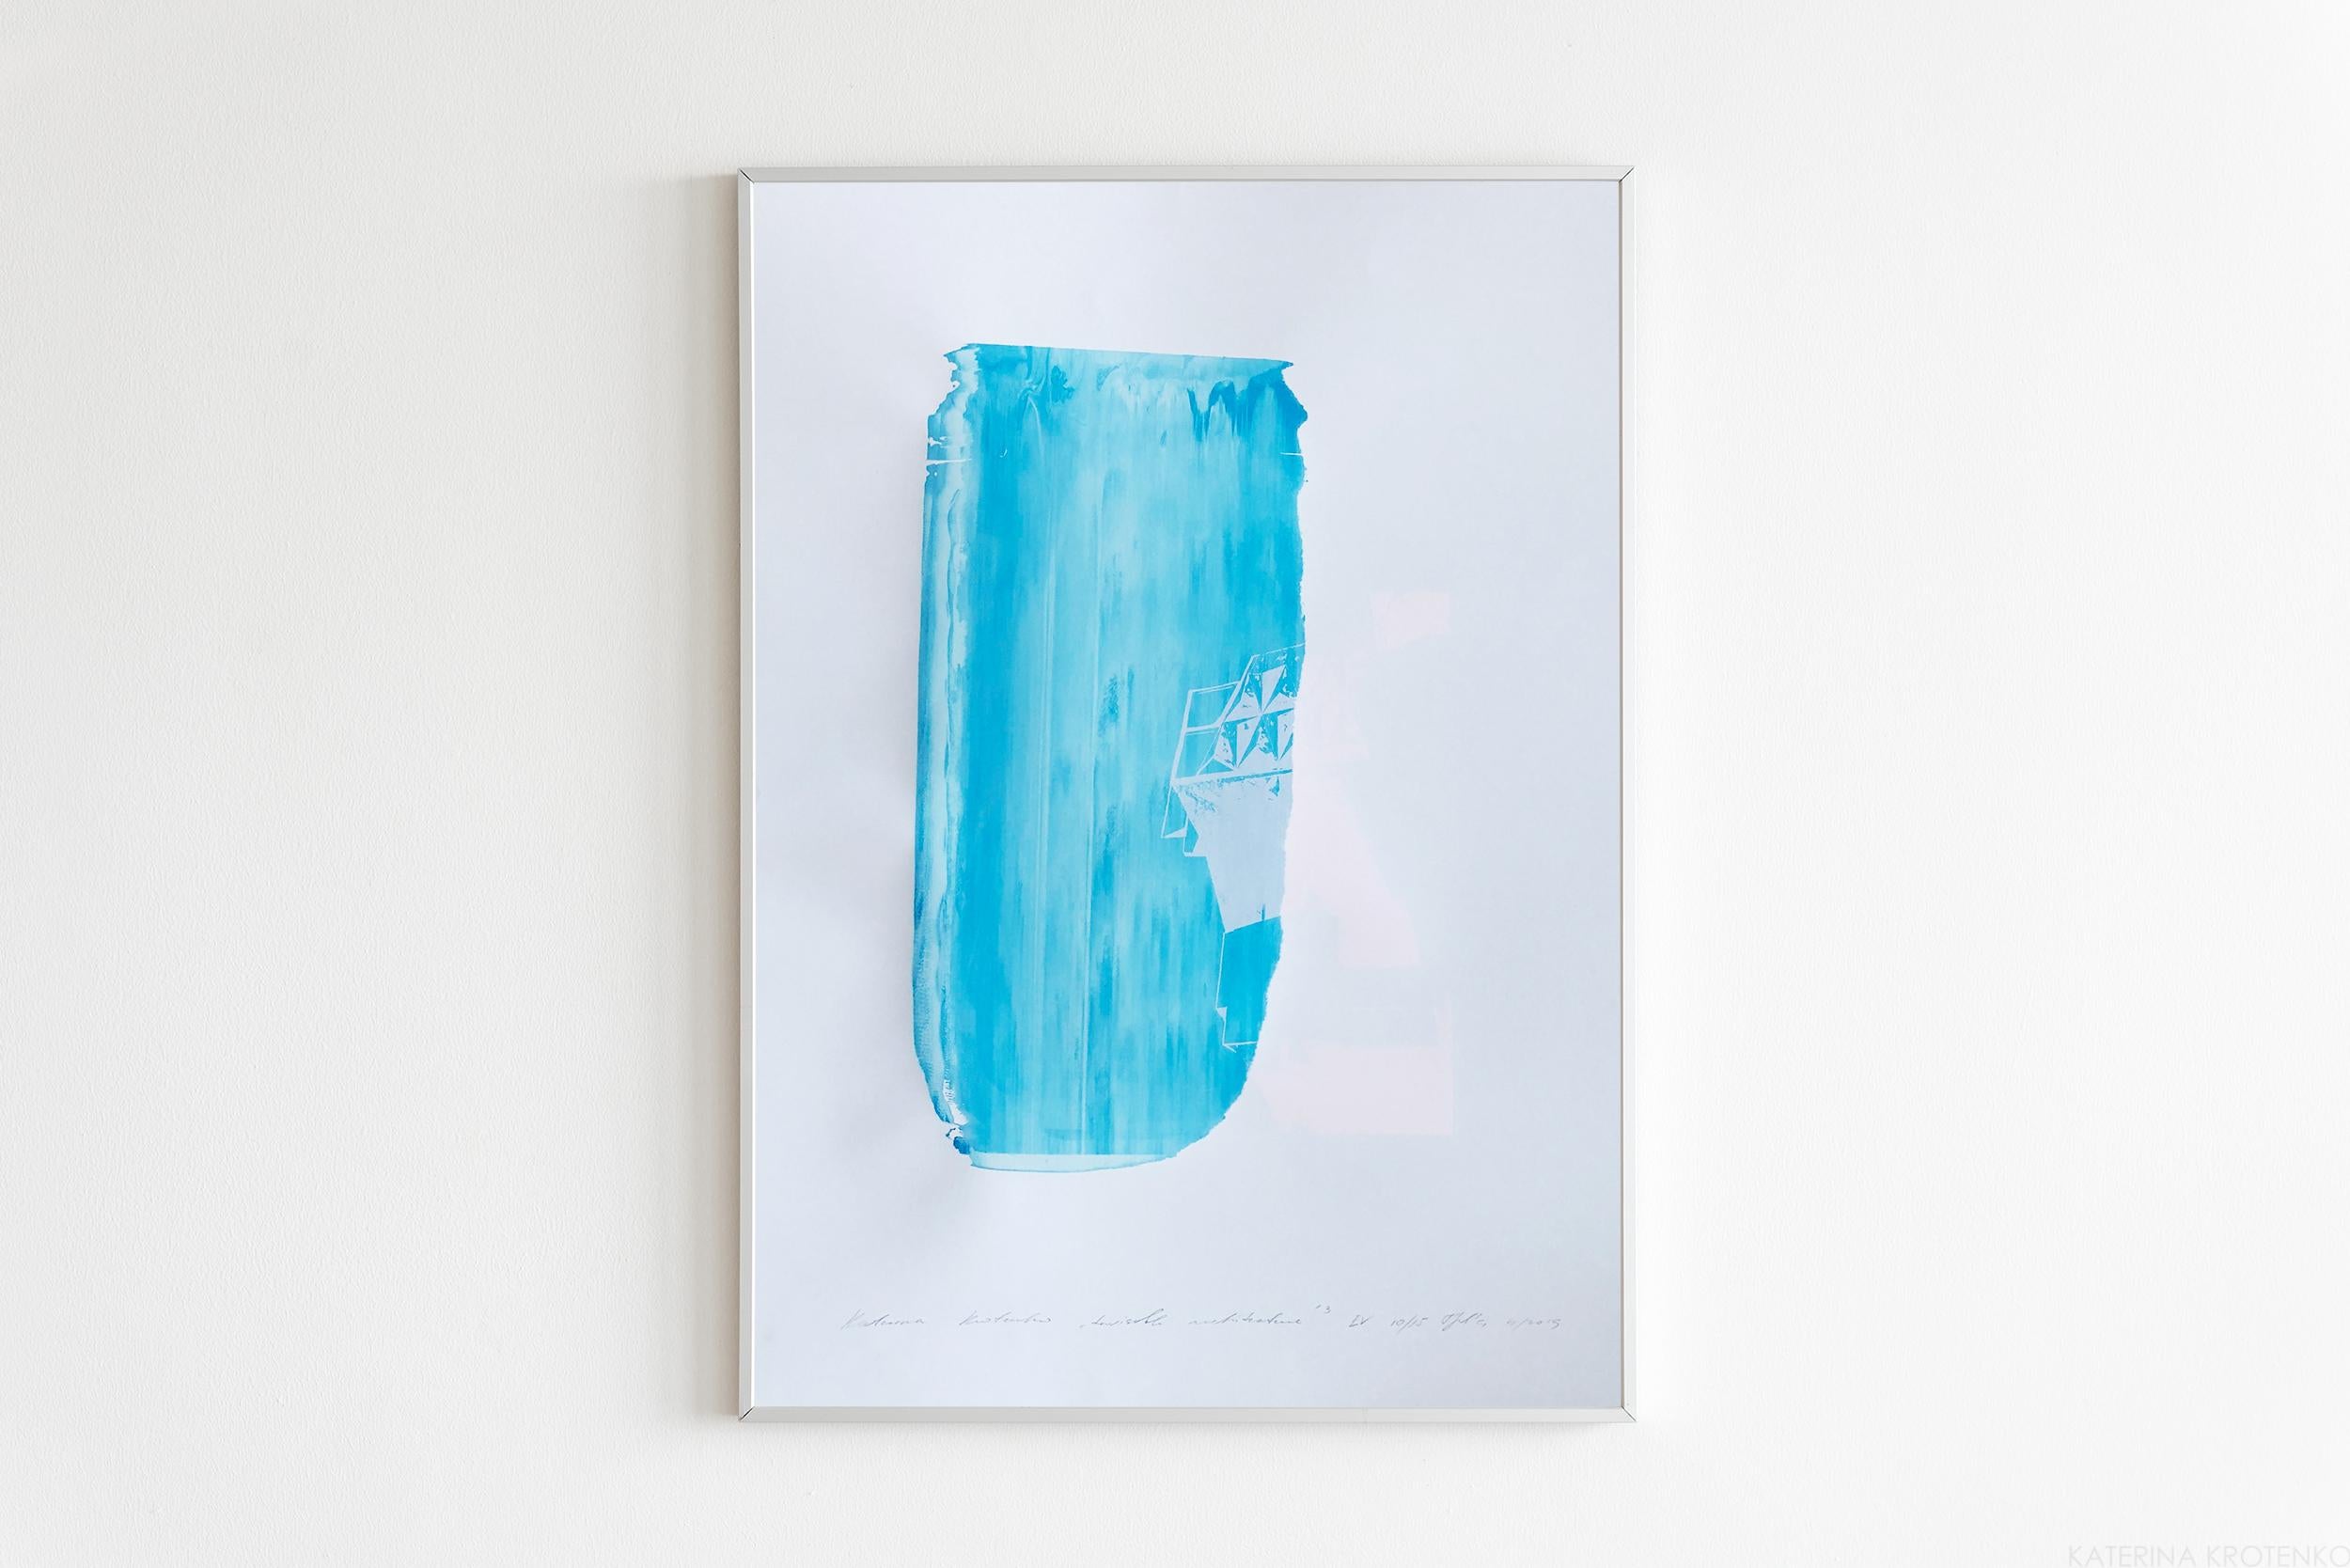 Katerina Krotenko Abstract Print - Invisible treasures # 3 architectural serigraphy no. 10 / 15